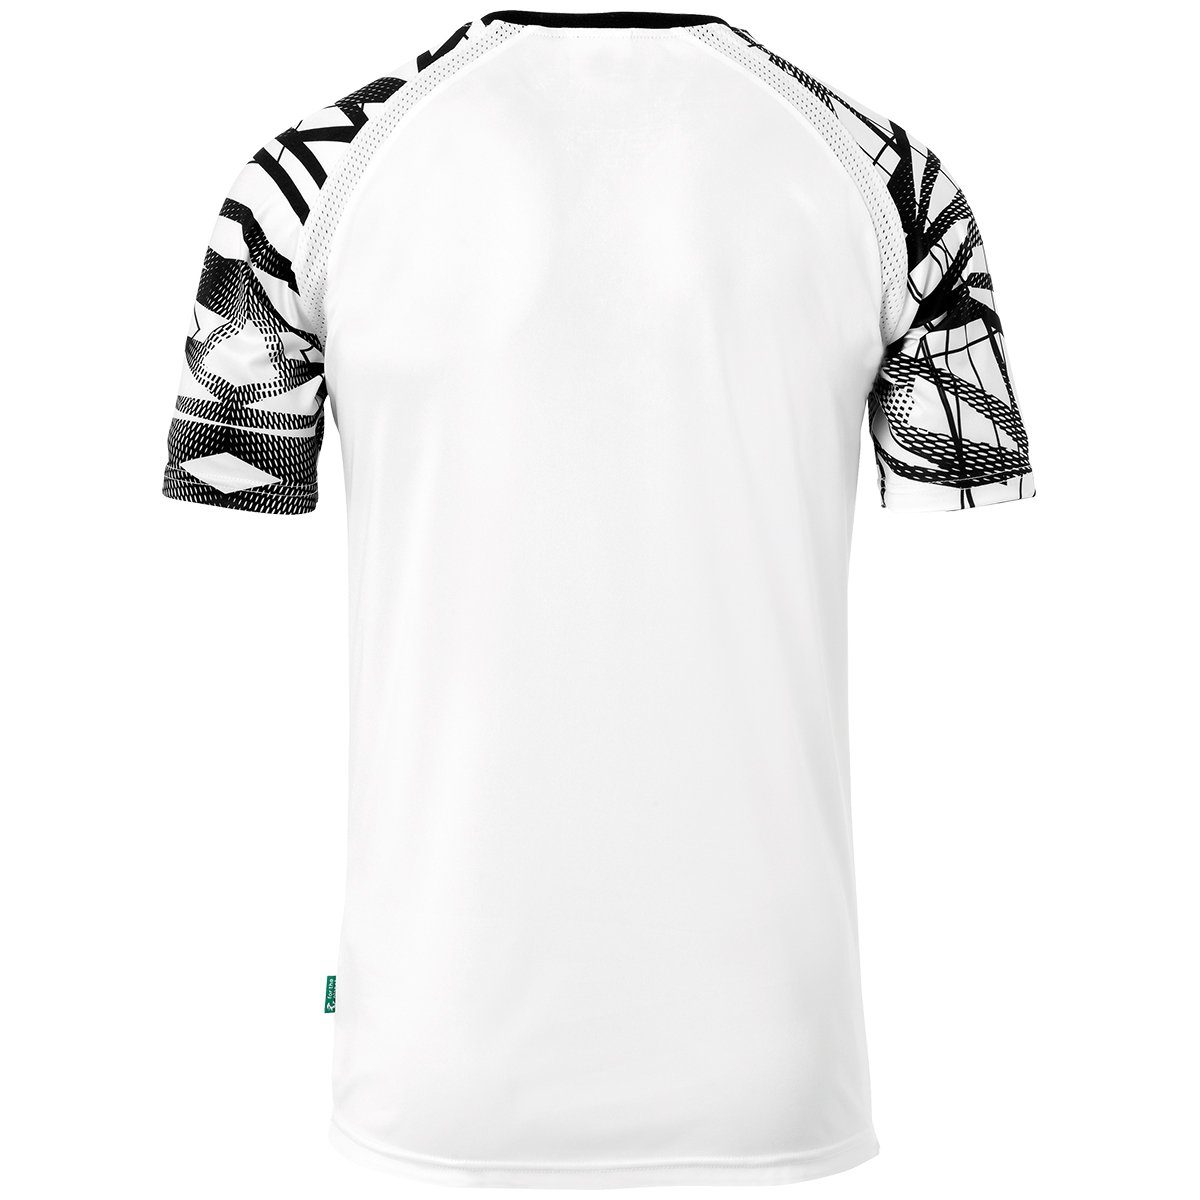 uhlsport Trainings-T-Shirt weiß/schwarz Trainingsshirt uhlsport KURZARM TRIKOT 25 GOAL atmungsaktiv